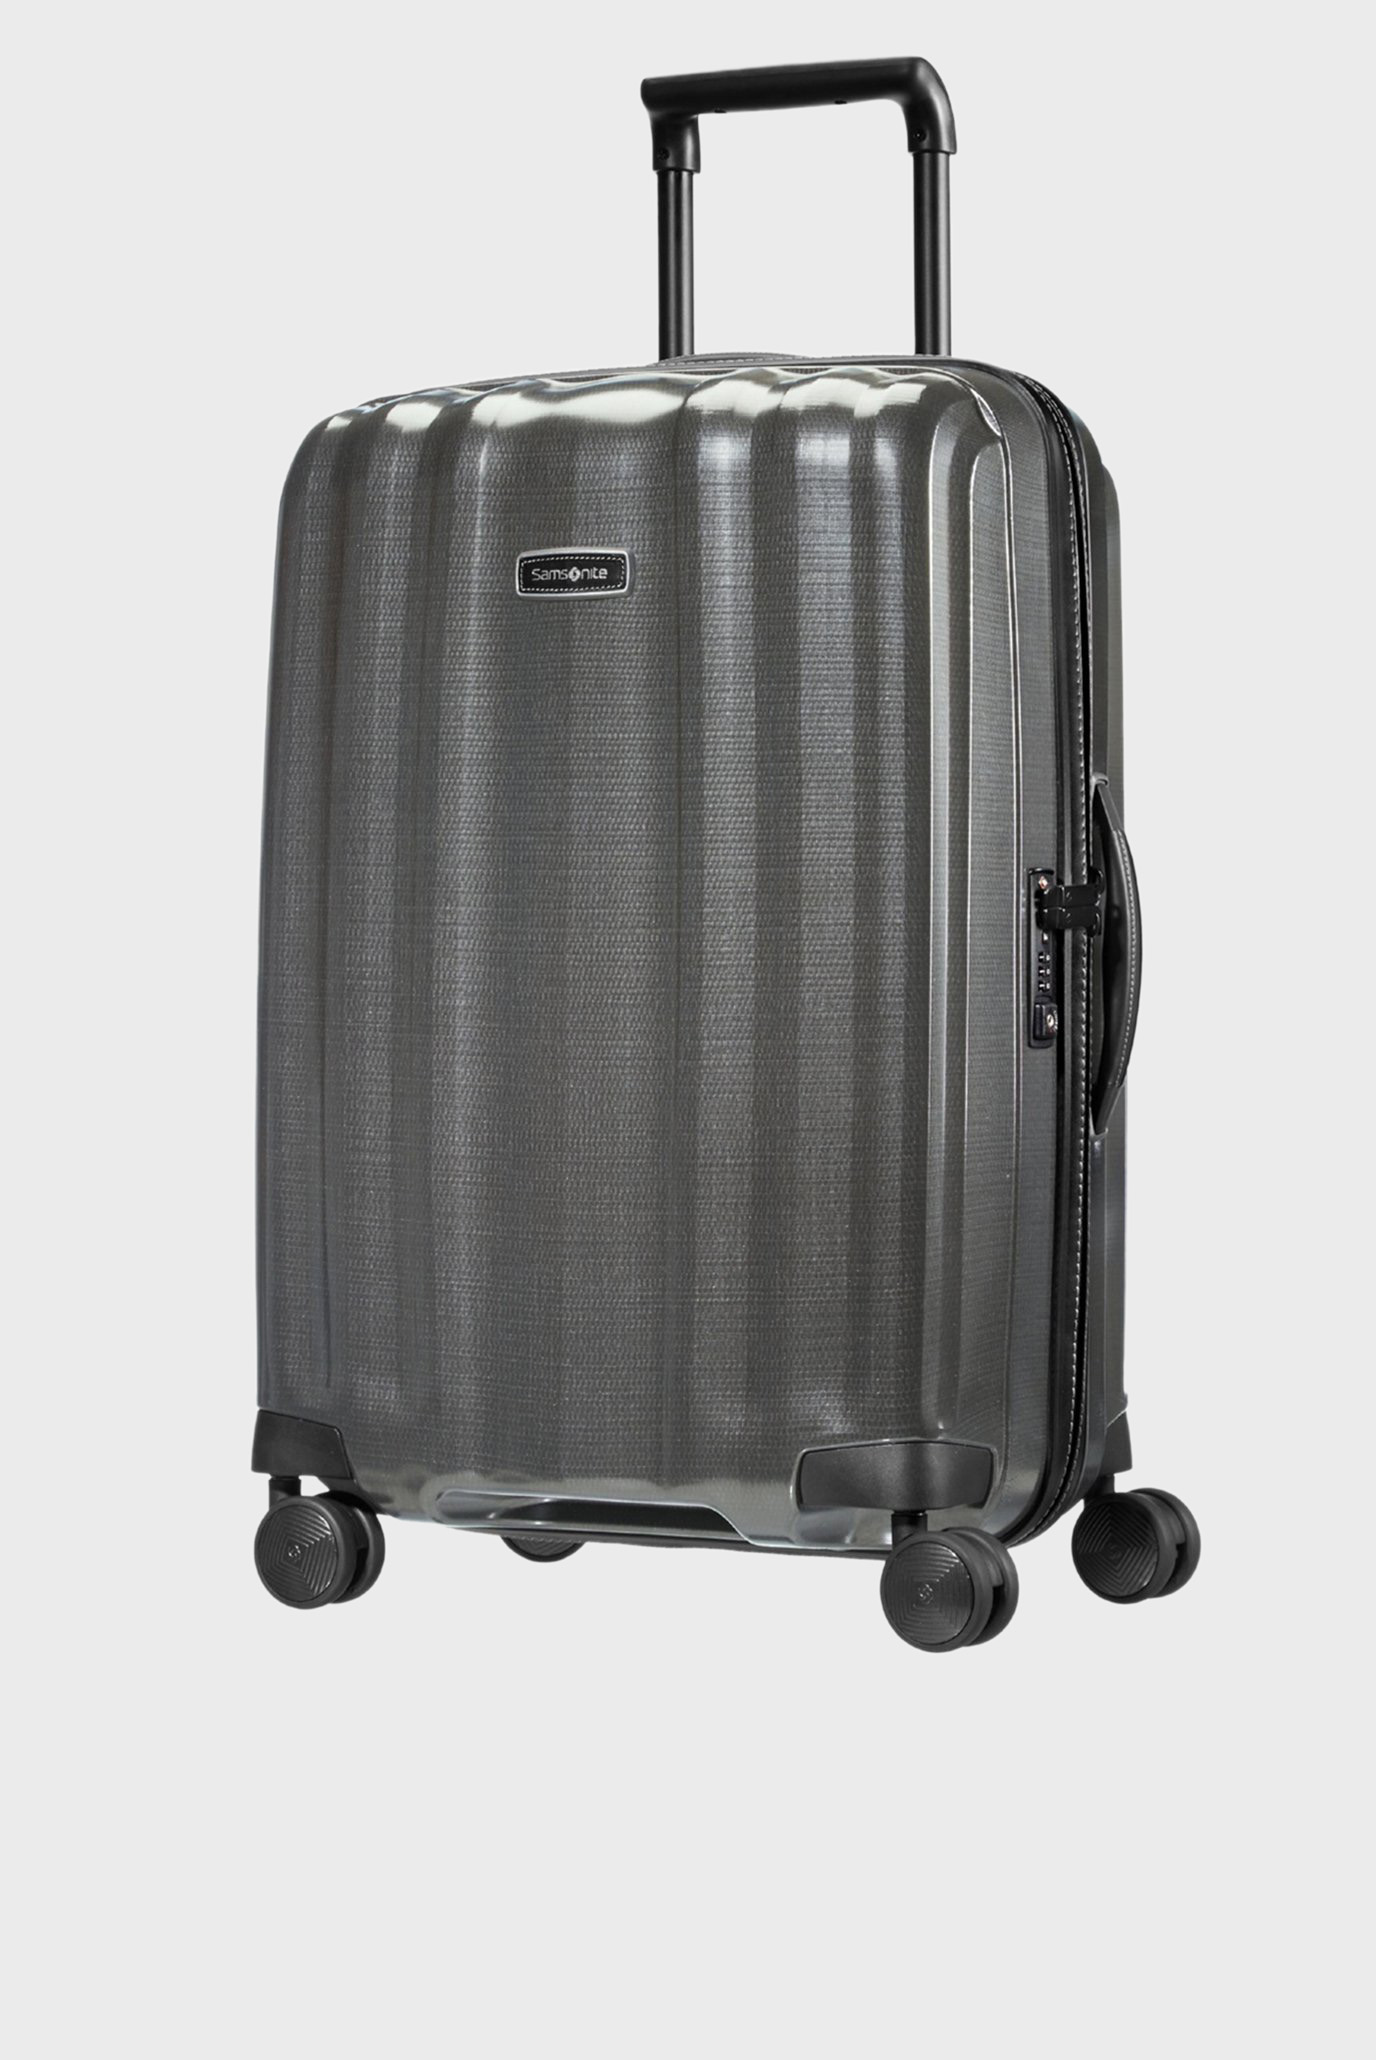 Серый чемодан 68 см LITE-CUBE DLX ECLIPSE GREY 1